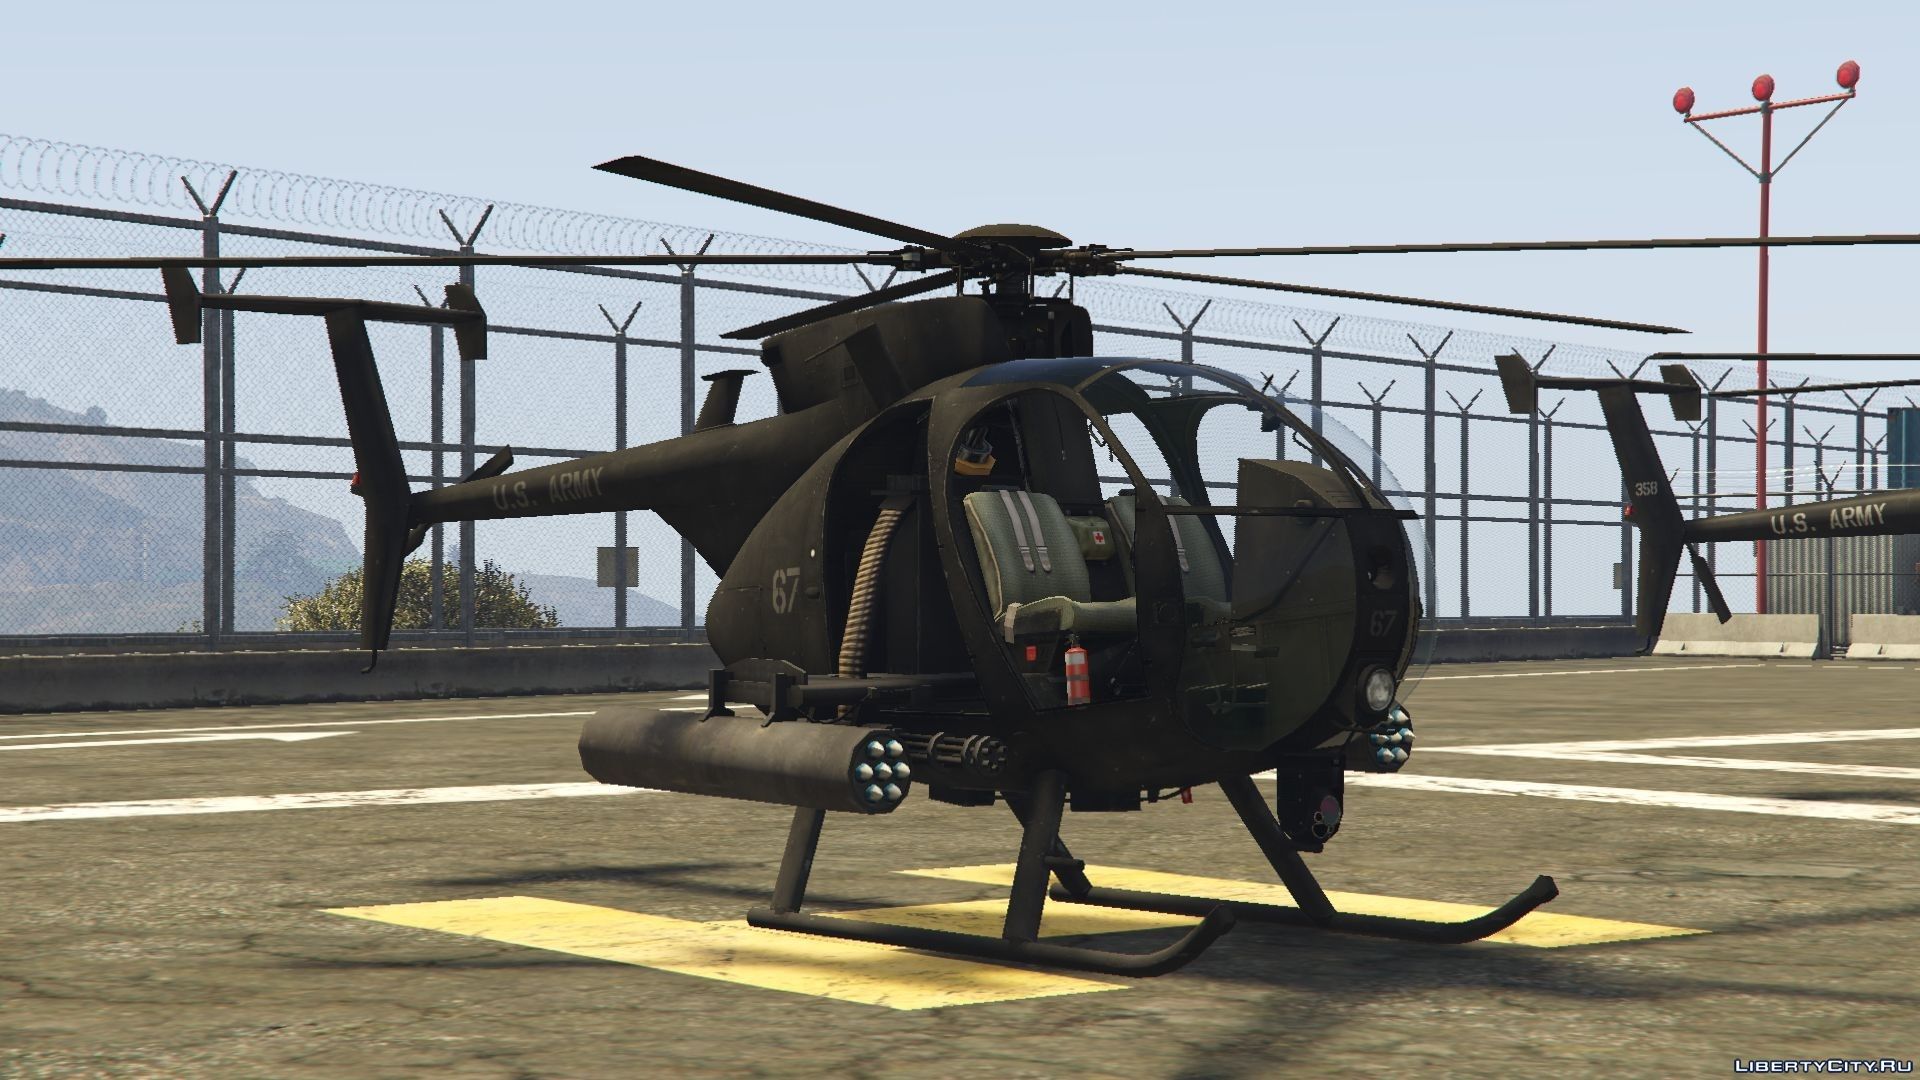 Гта мод вертолет. GTA 5 вертолет Buzzard. Вертолет бузард ГТА 5. Вертолет Буззард в ГТА 5. Баззард ГТА 5.